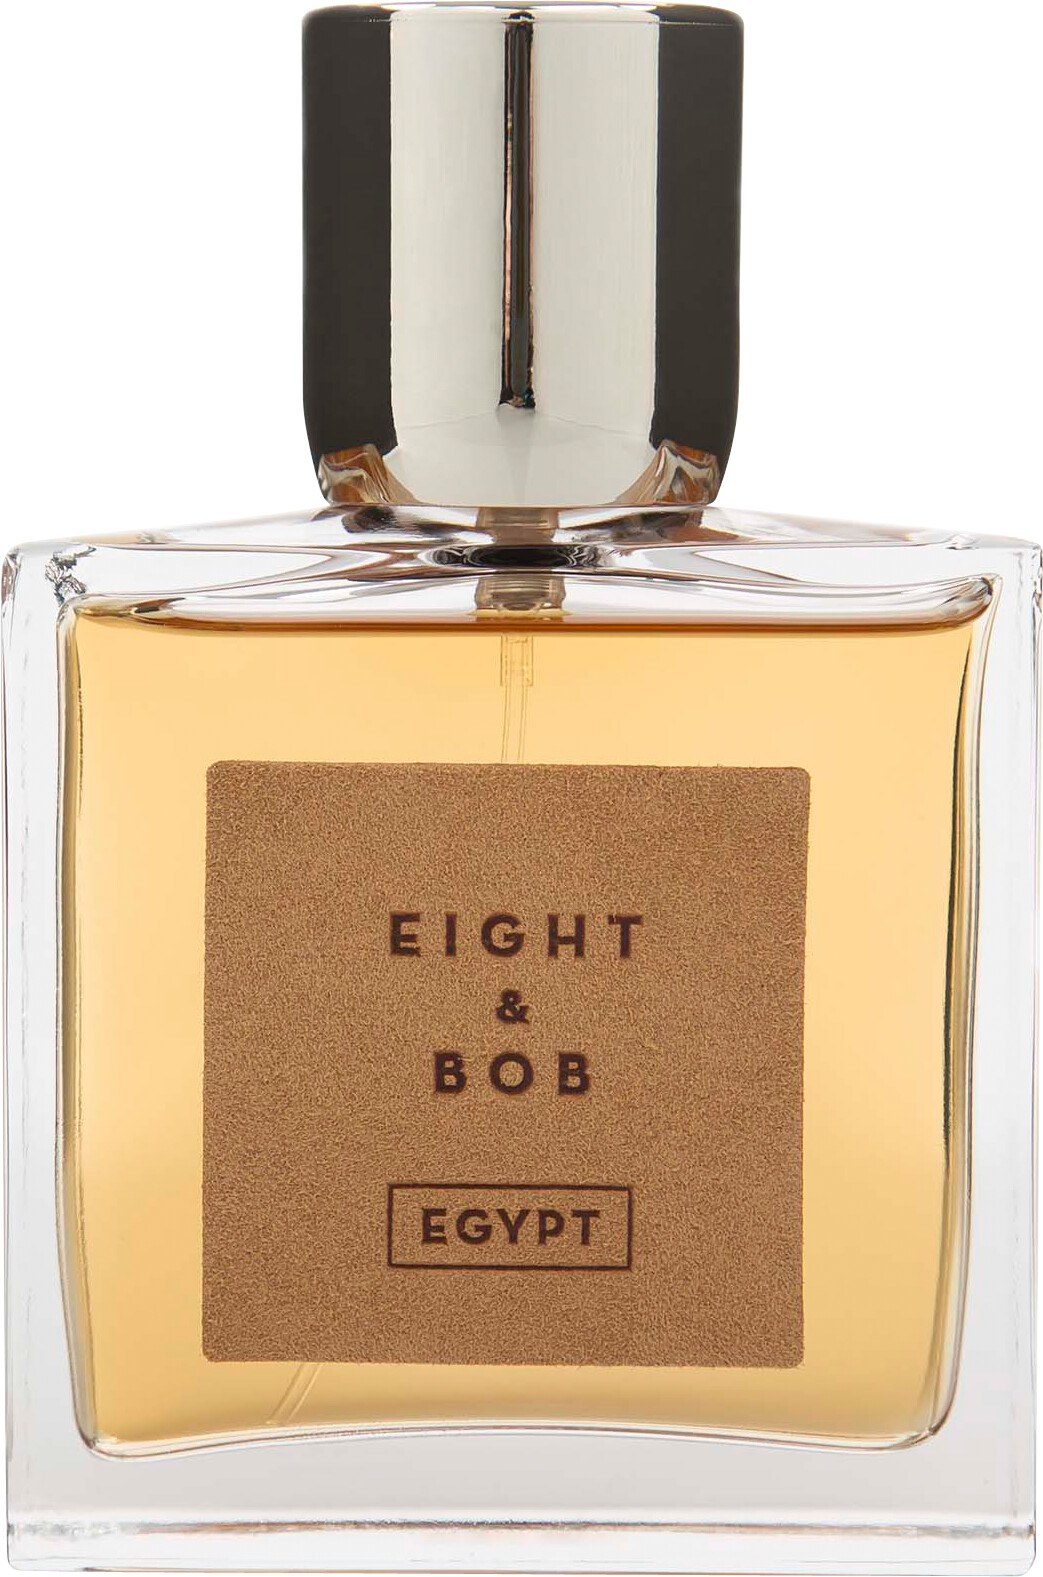 Eight & Bob Egypt Eau de Parfum Spray 100ml